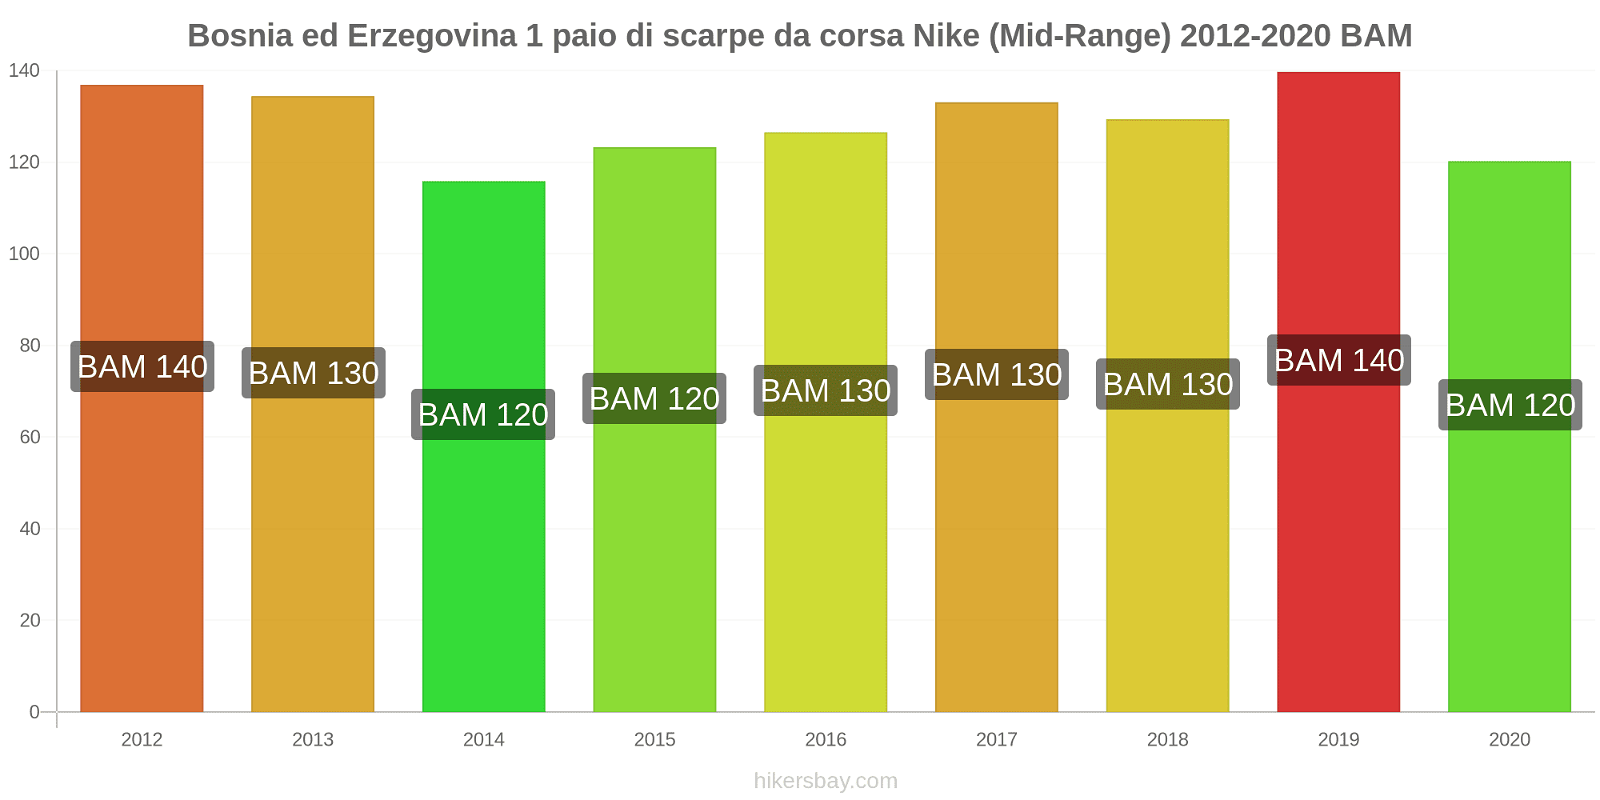 Bosnia ed Erzegovina variazioni di prezzo 1 paio di scarpe da corsa Nike (simile) hikersbay.com